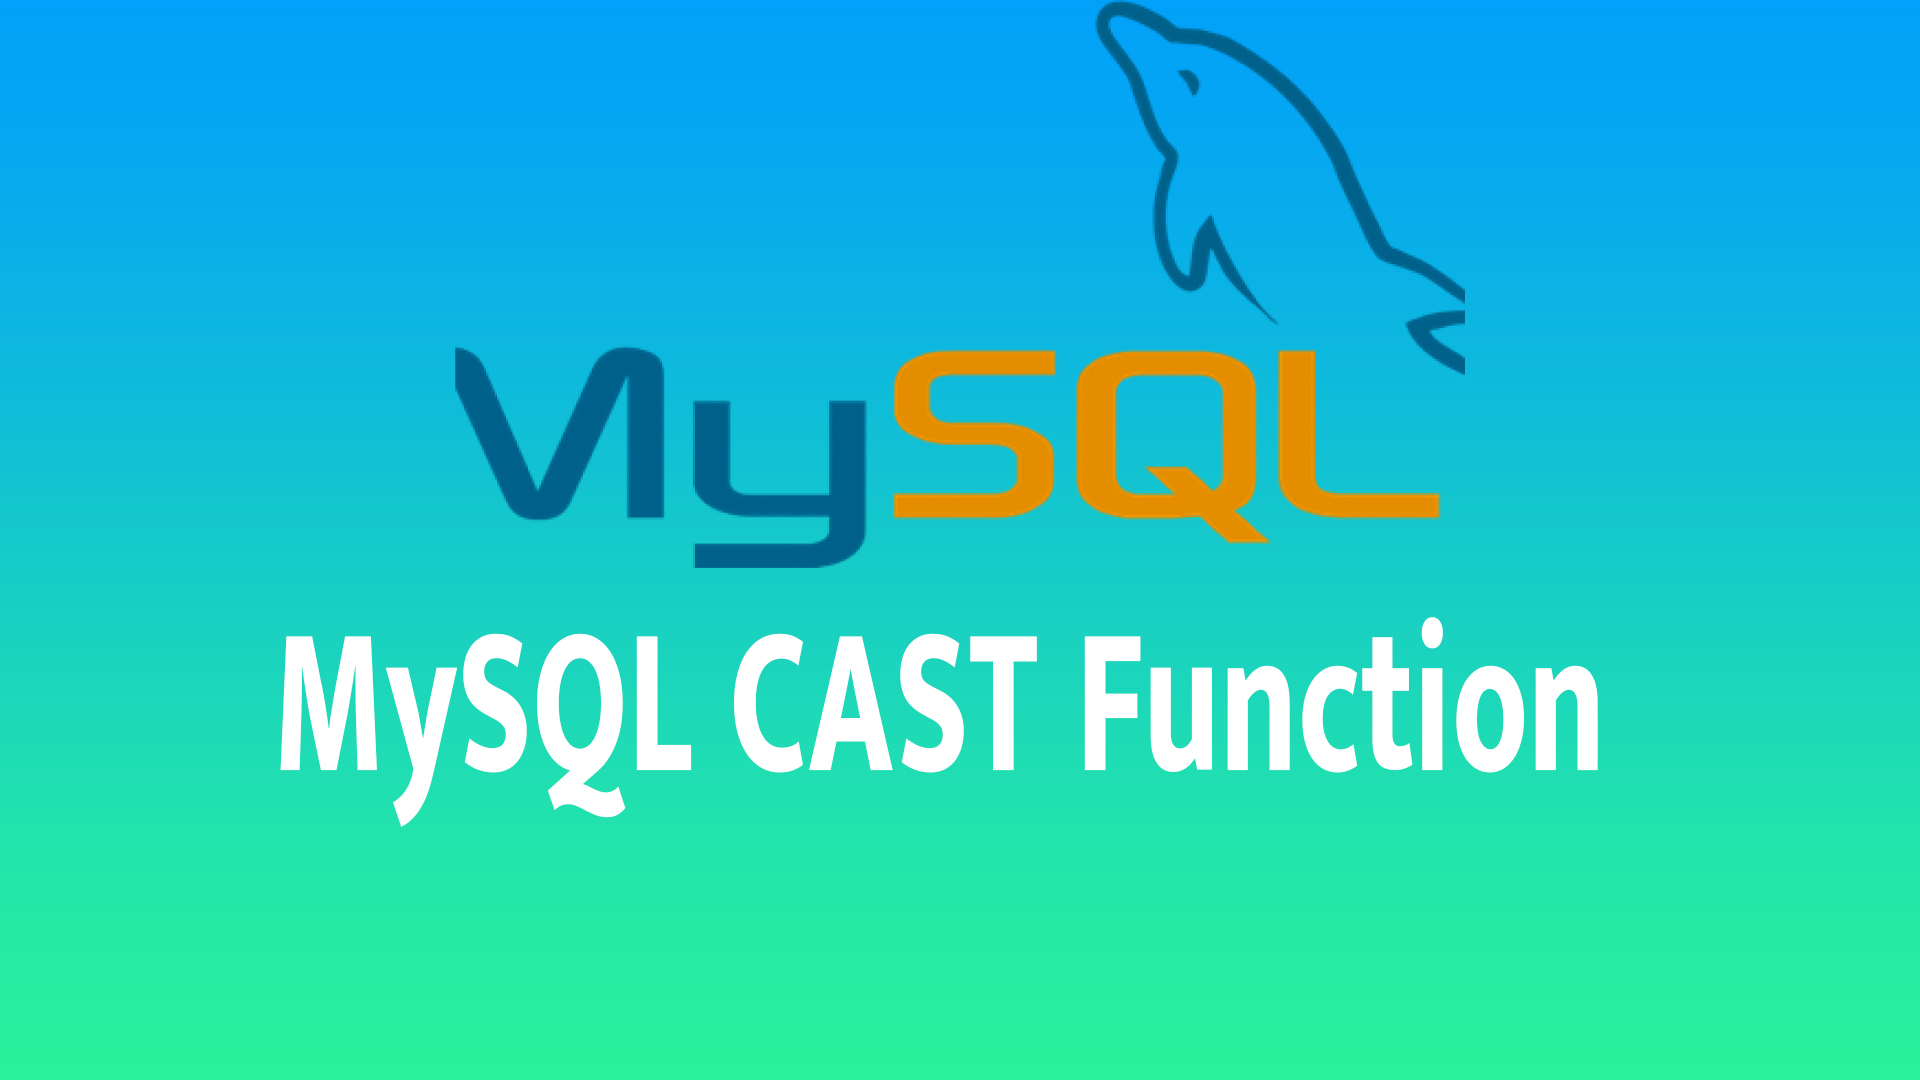 MYSQL Cast. Decimal MYSQL. Decimal in MYSQL. MYSQL Cast month. Cast function